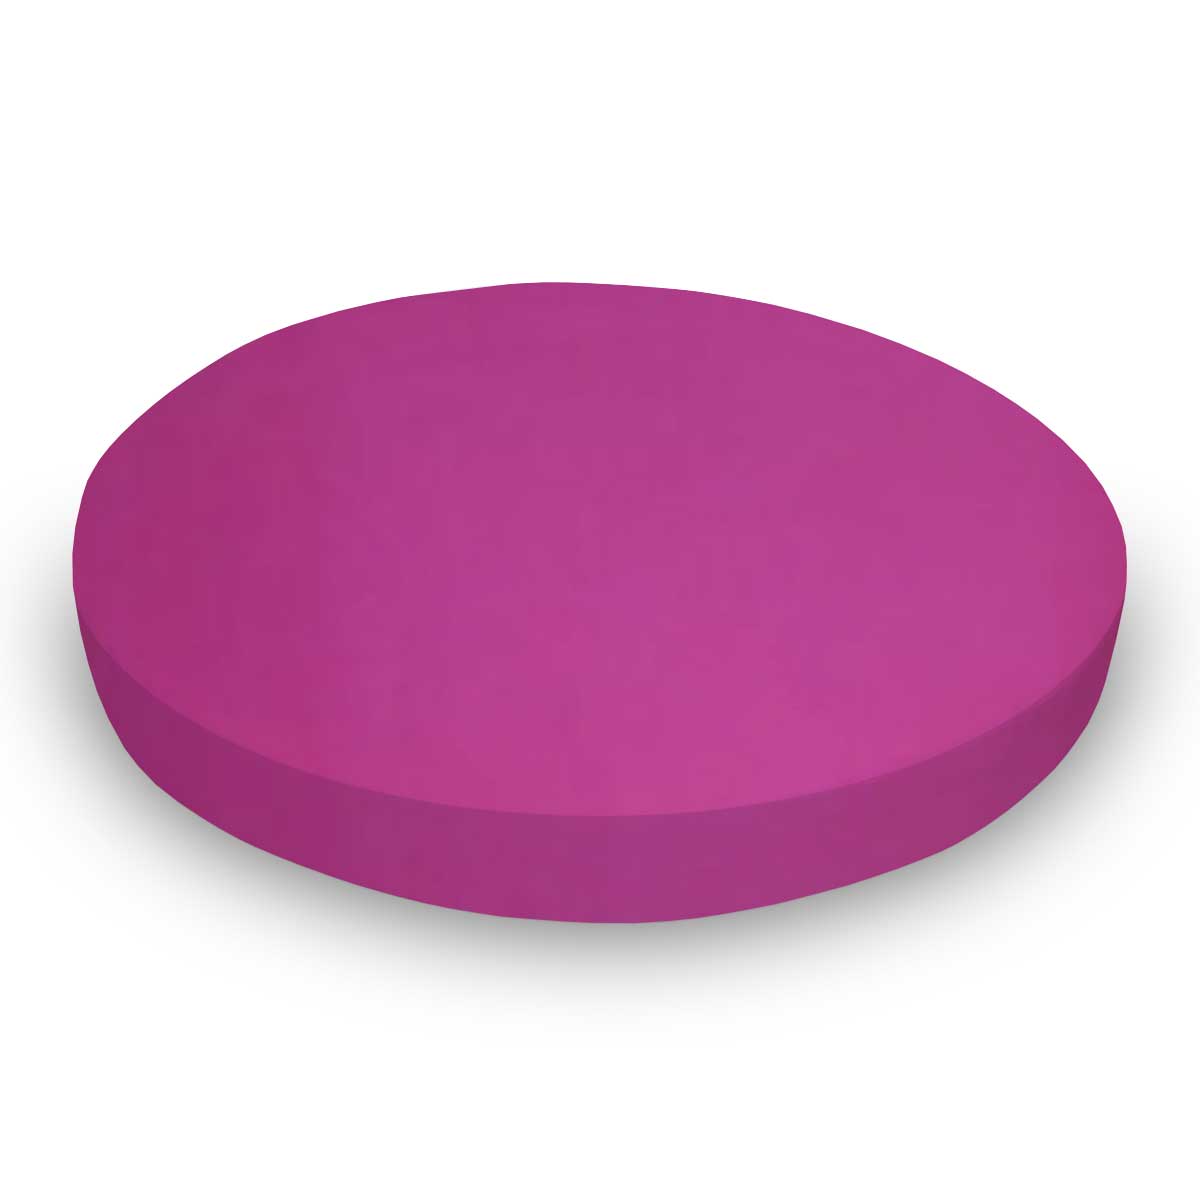 SKM-WS3B Oval (Stokke Mini) - Hot Pink Woven - Fitted  Oval sku SKM-WS3B